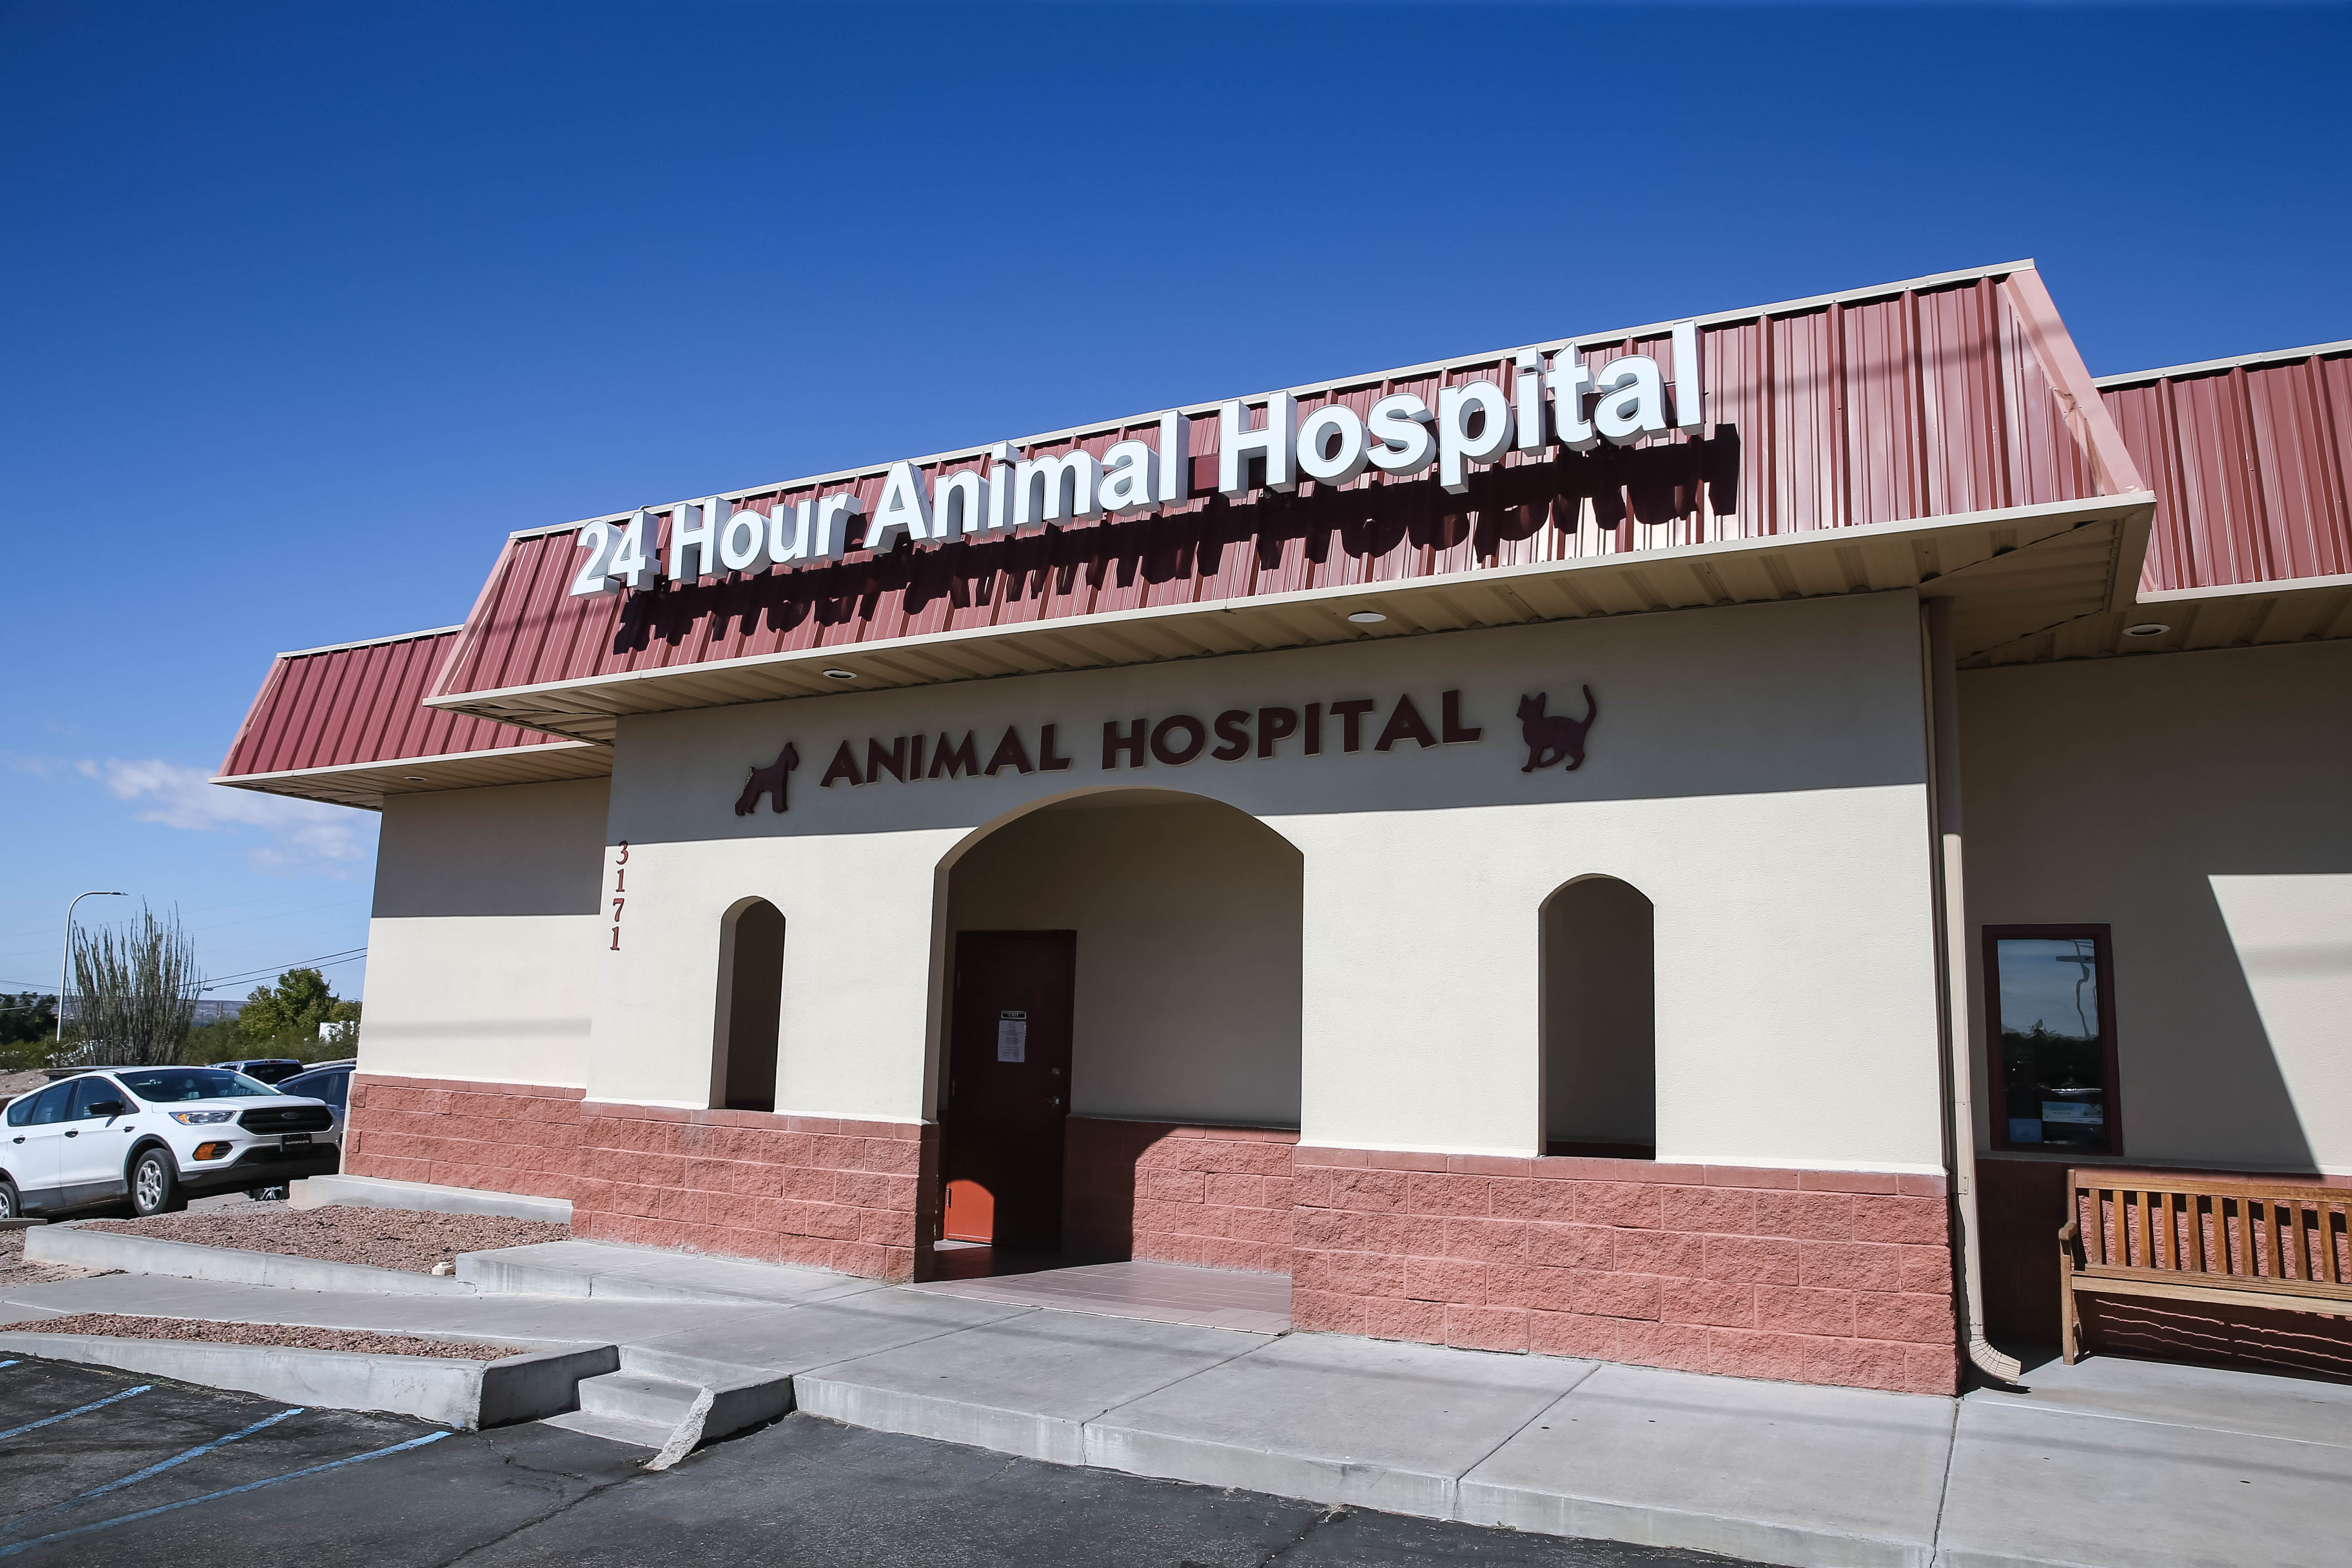 nearest animal hospital 24 hours